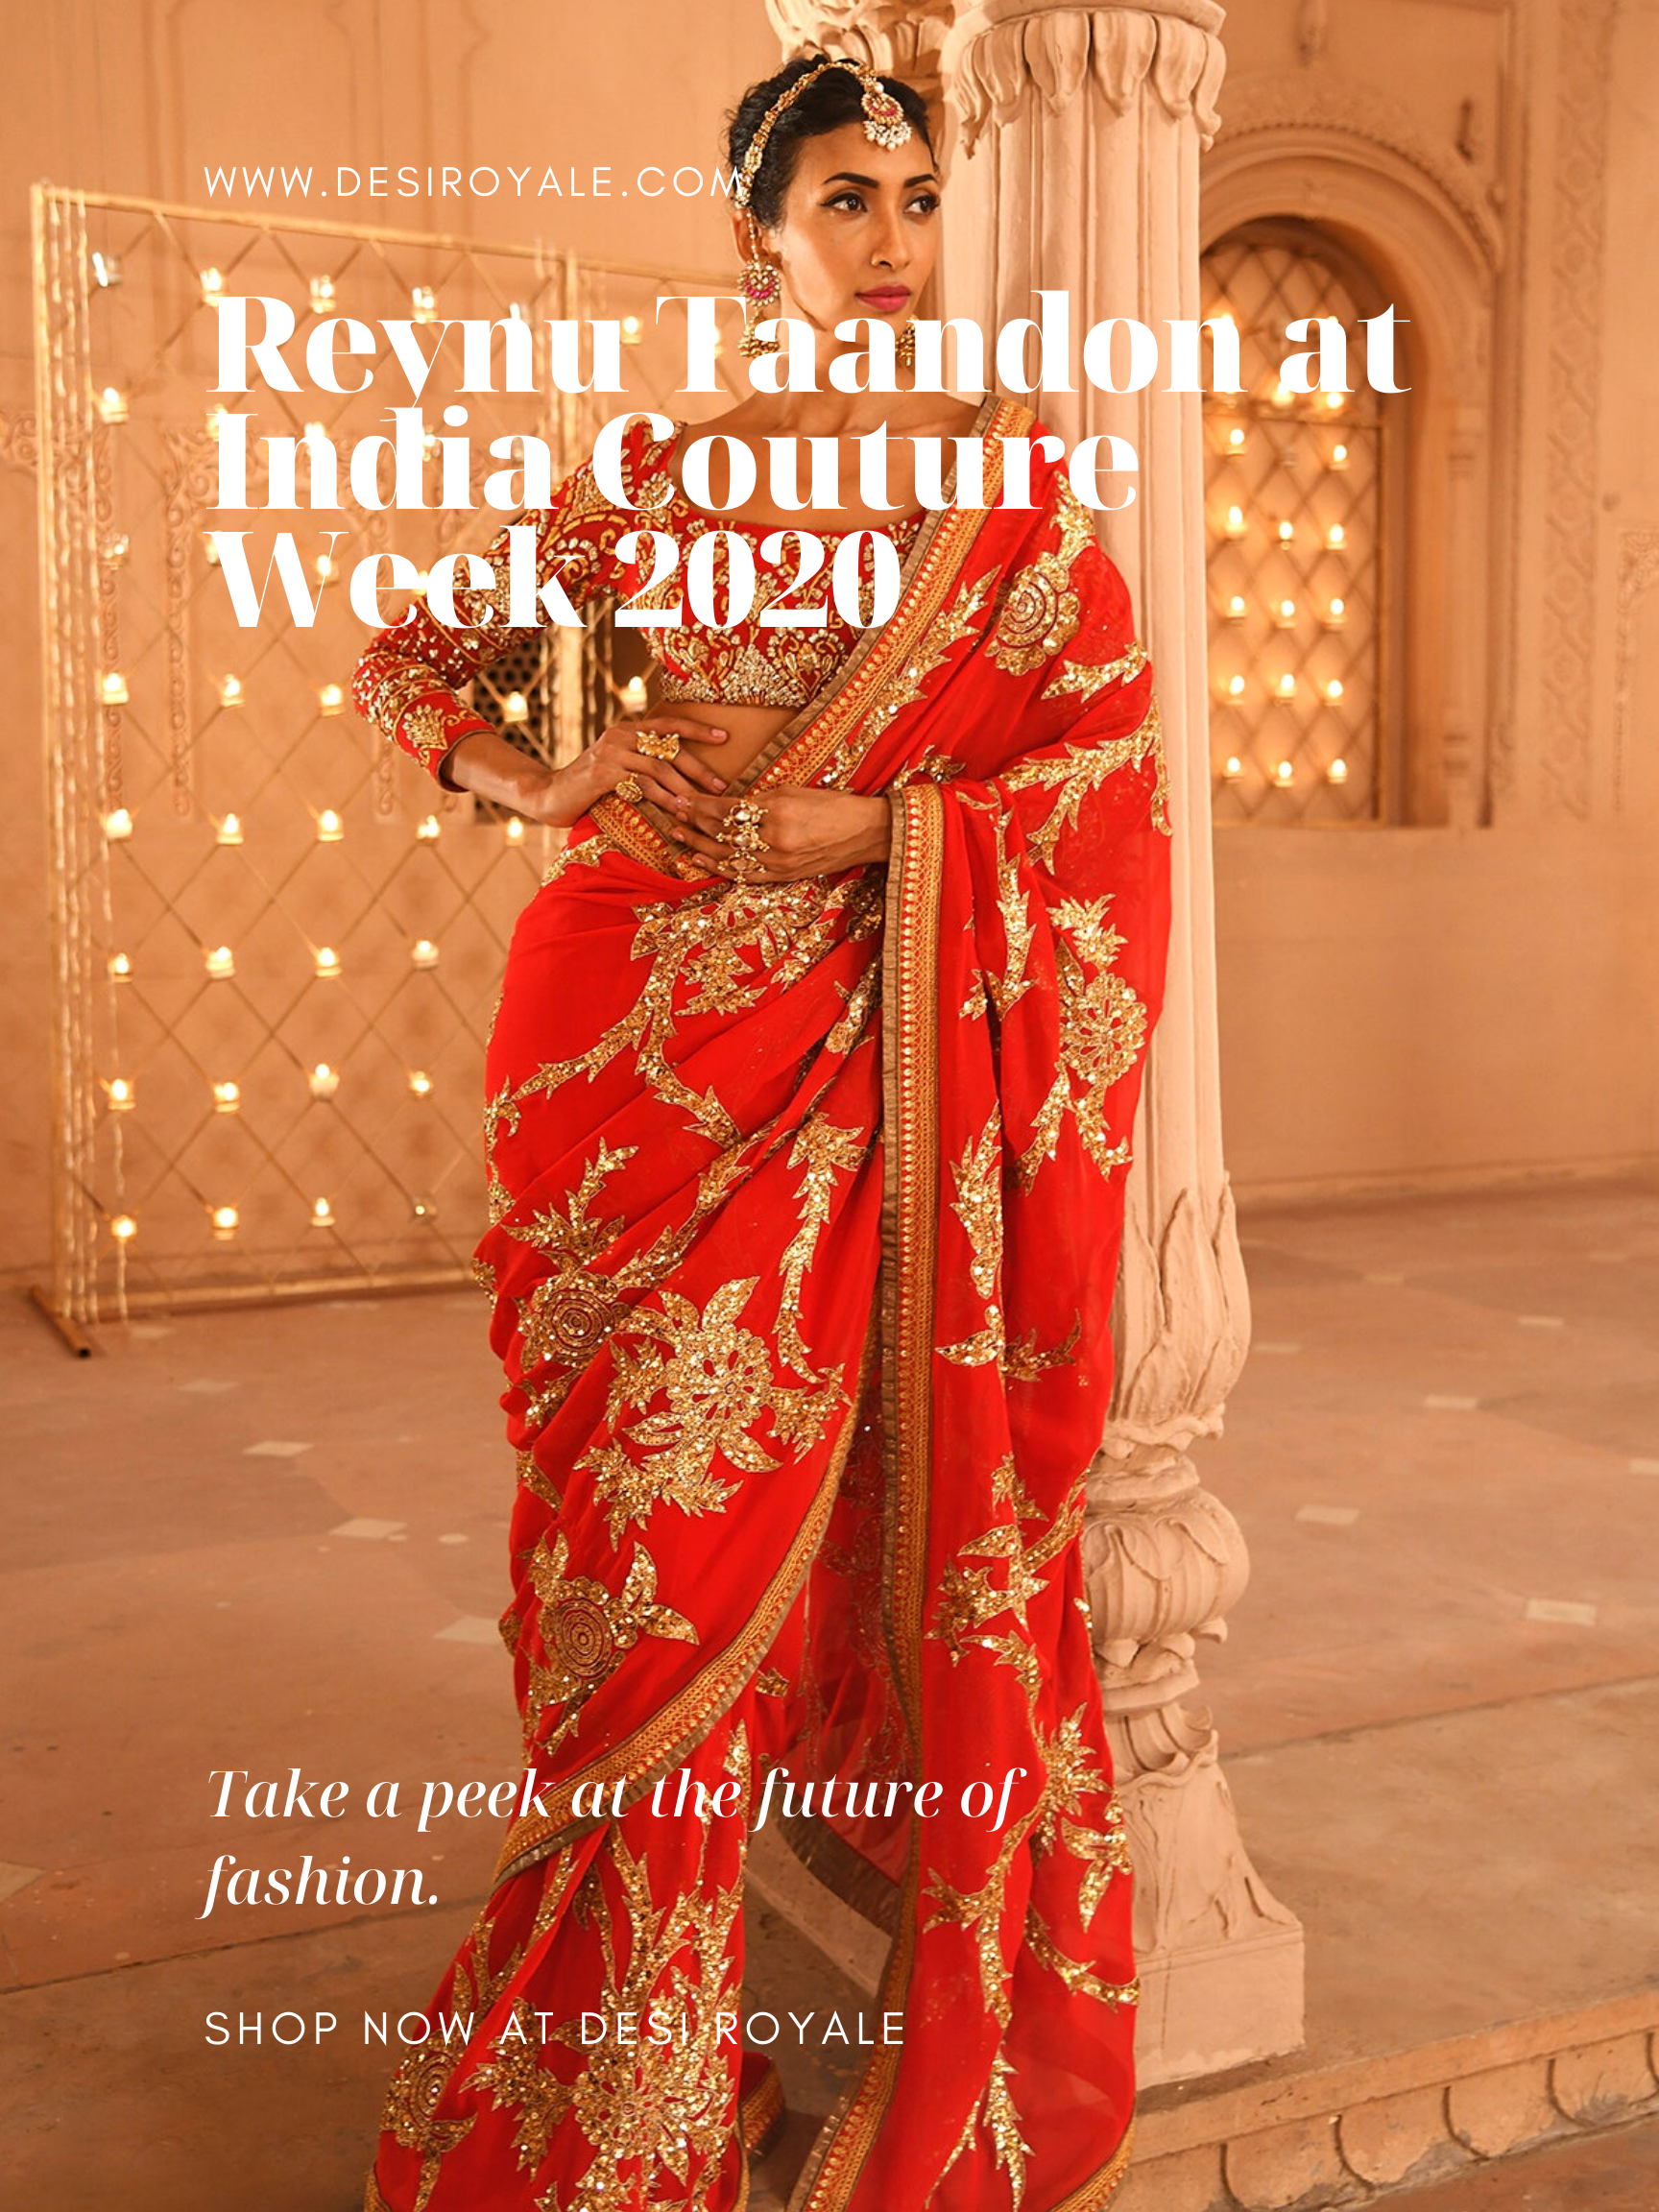 Reynu Taandon at India Couture Week 2020